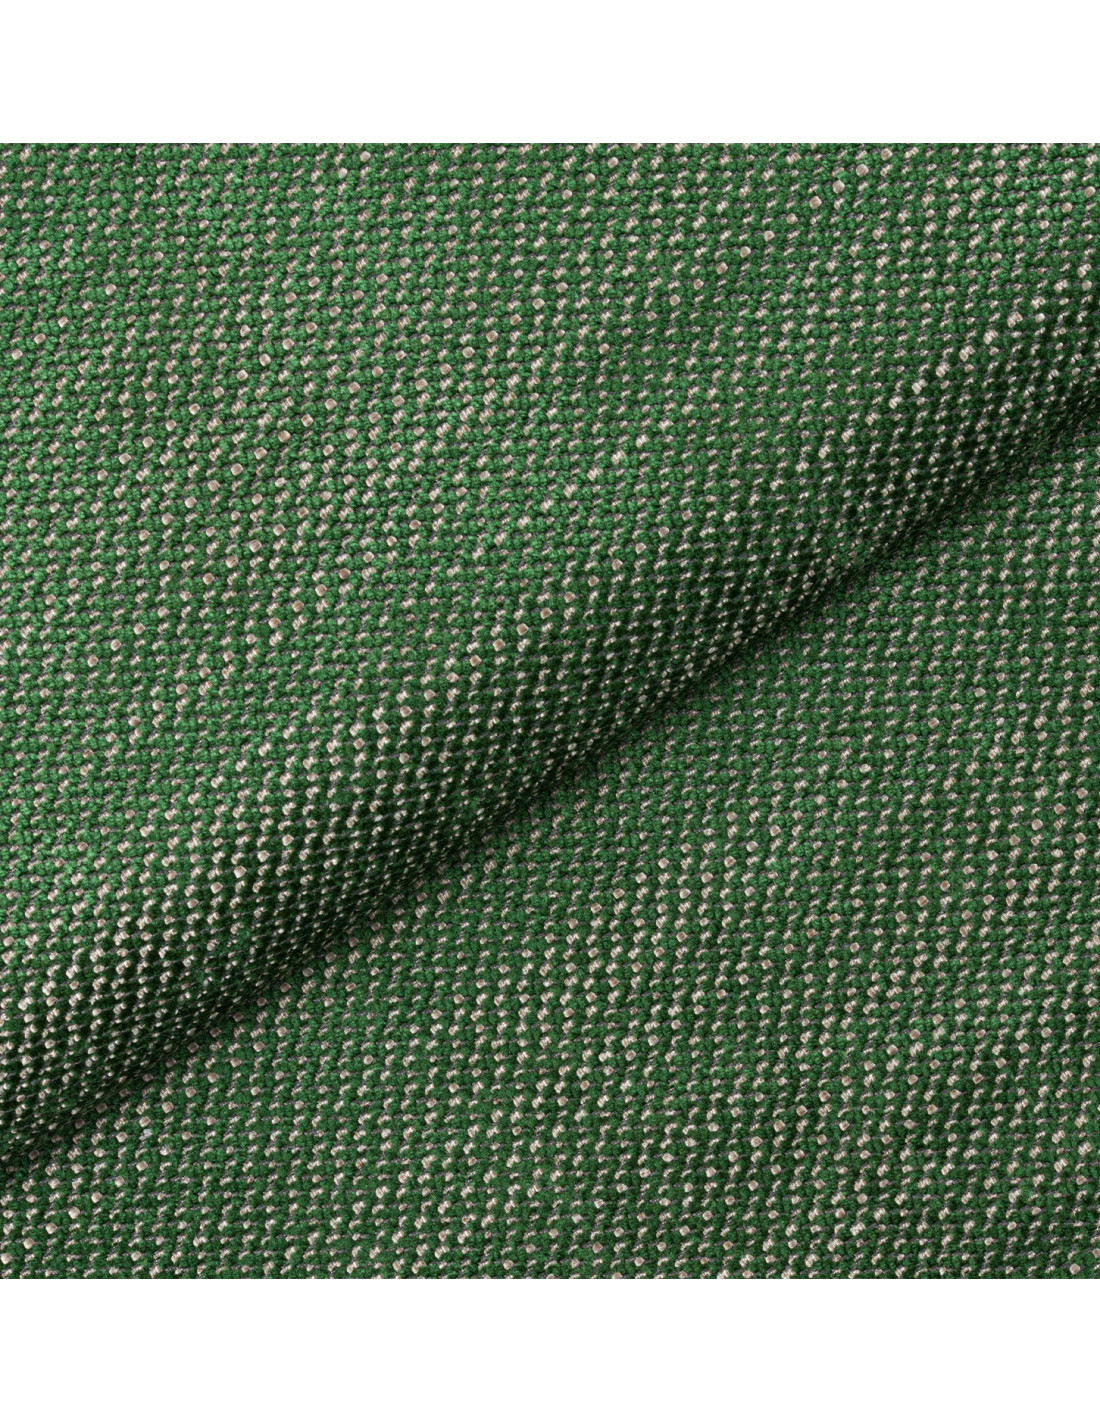 ROJA 05 chenille fabric | sklep internetowy Kameleon.pro